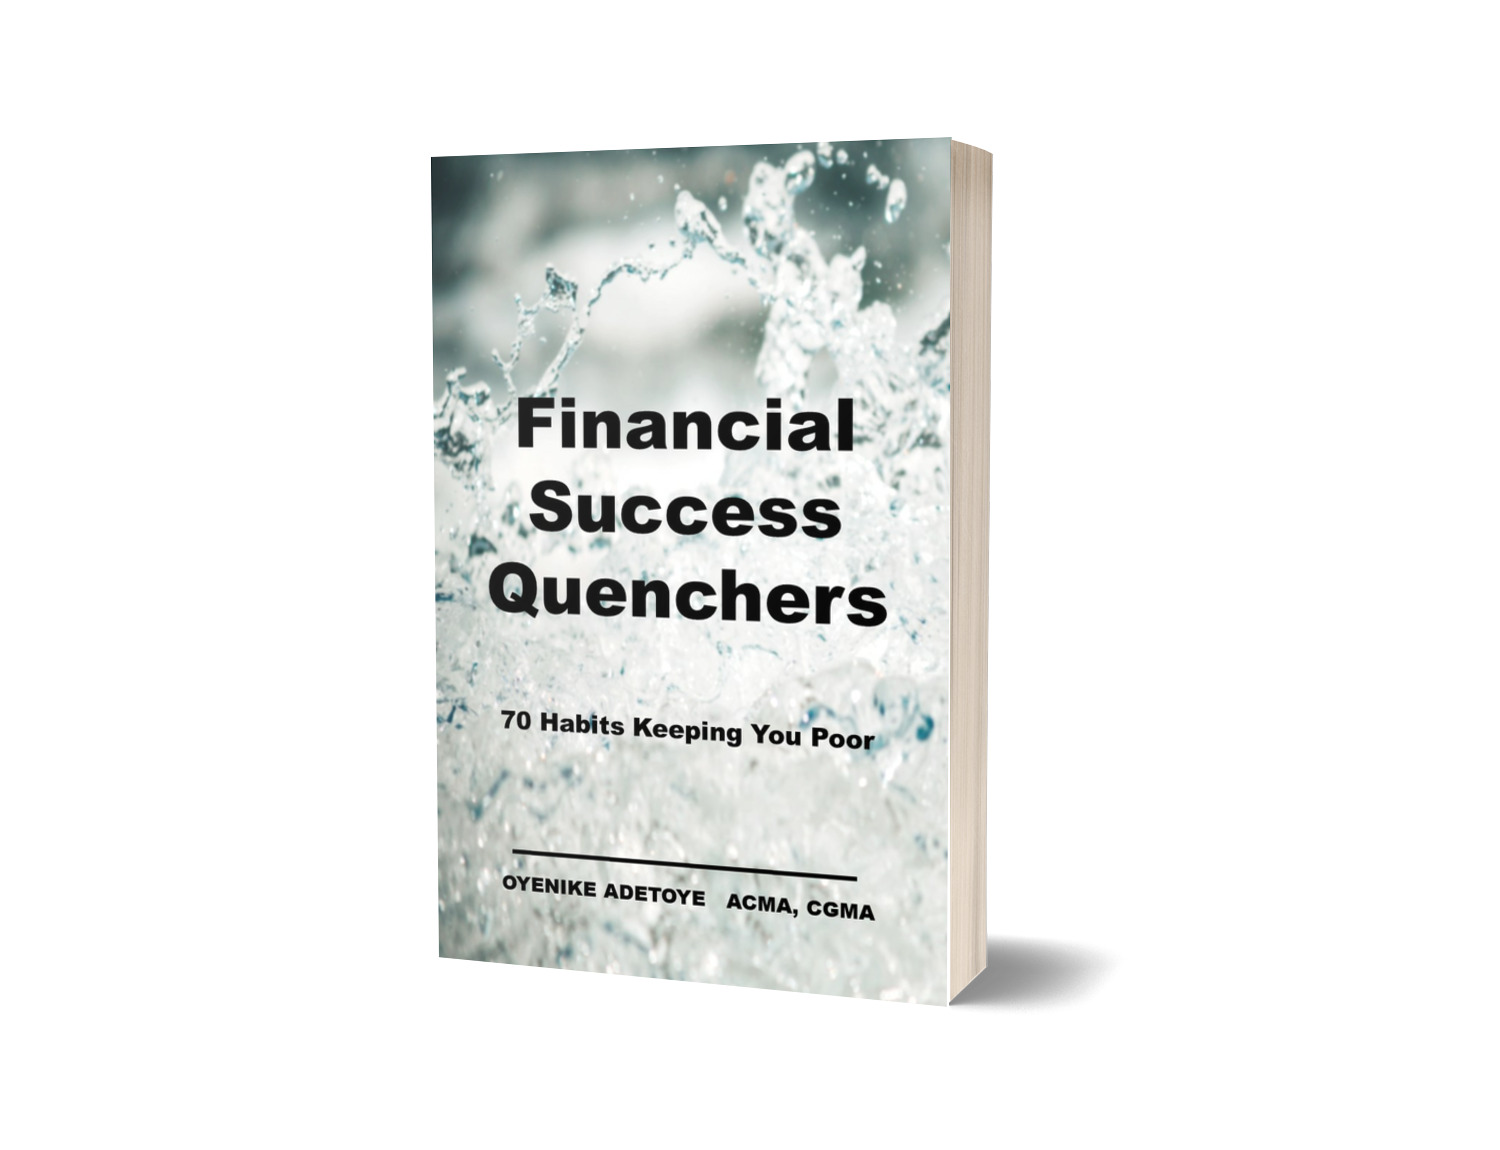 Financial Success Quenchers